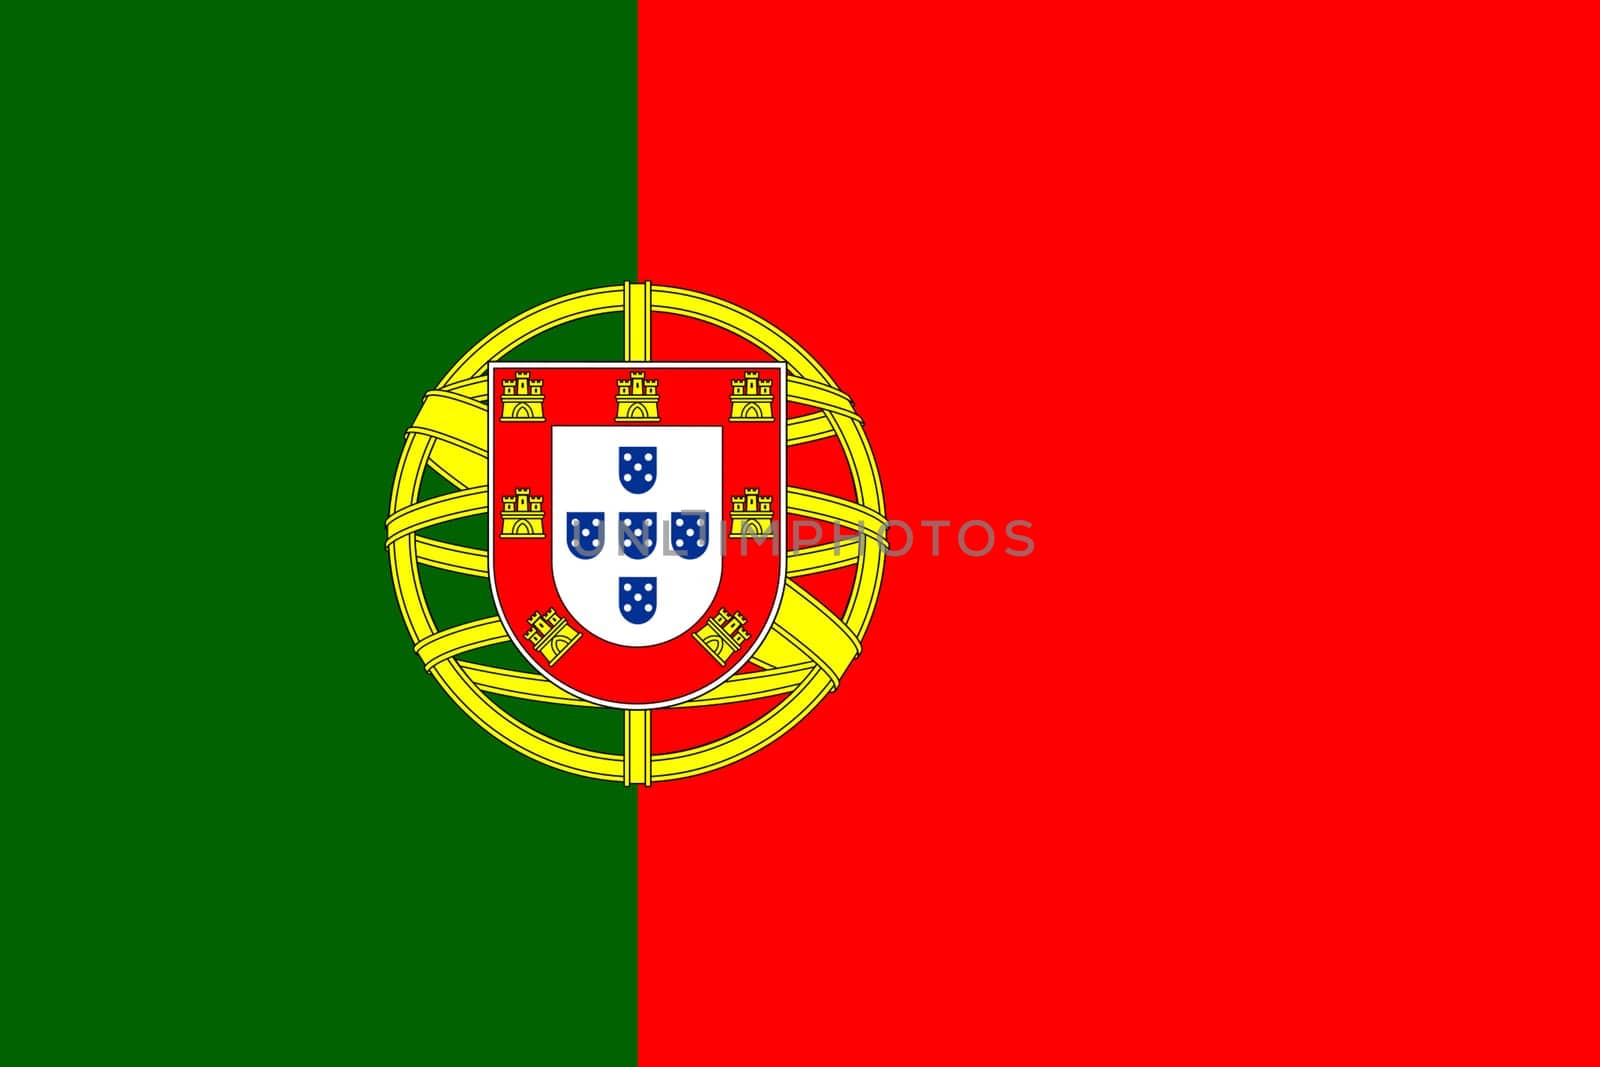 Portugal flag background 2D illustration by VivacityImages